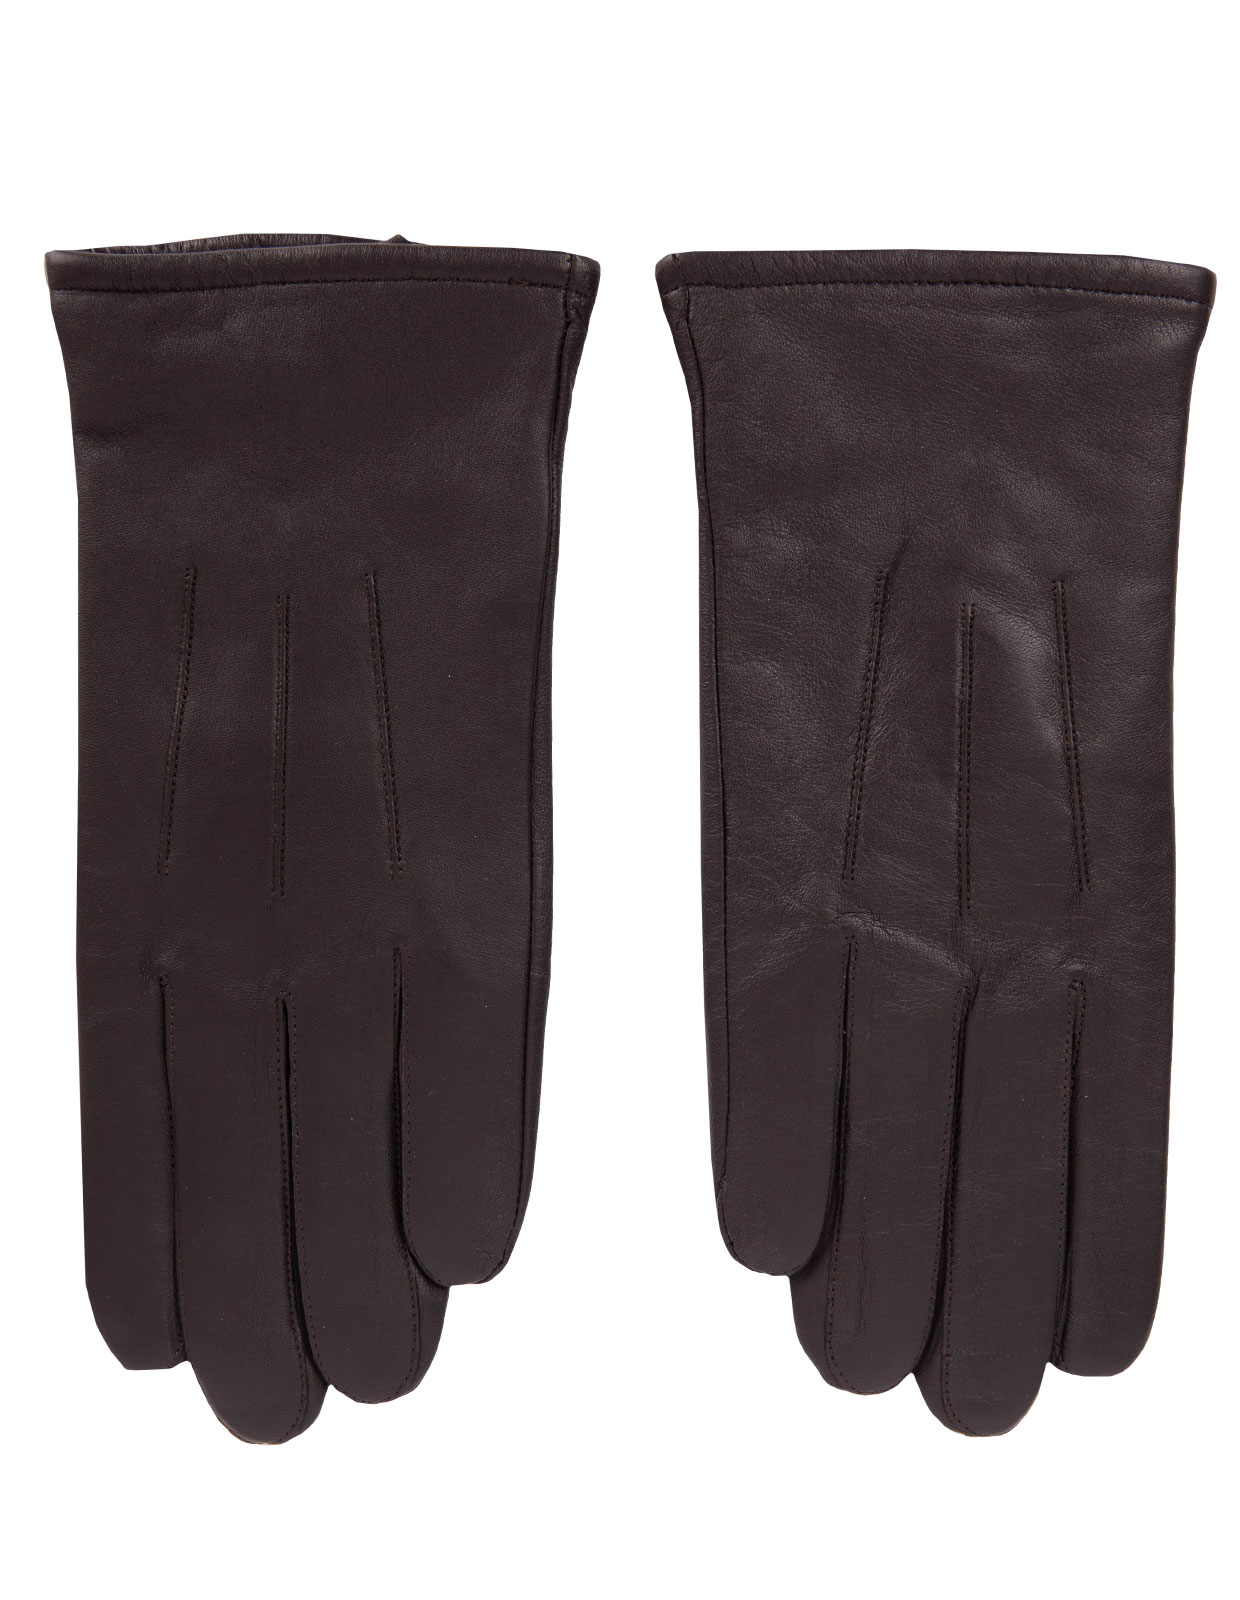 Classic Lambskin Gloves Chocolate Stl 10.5